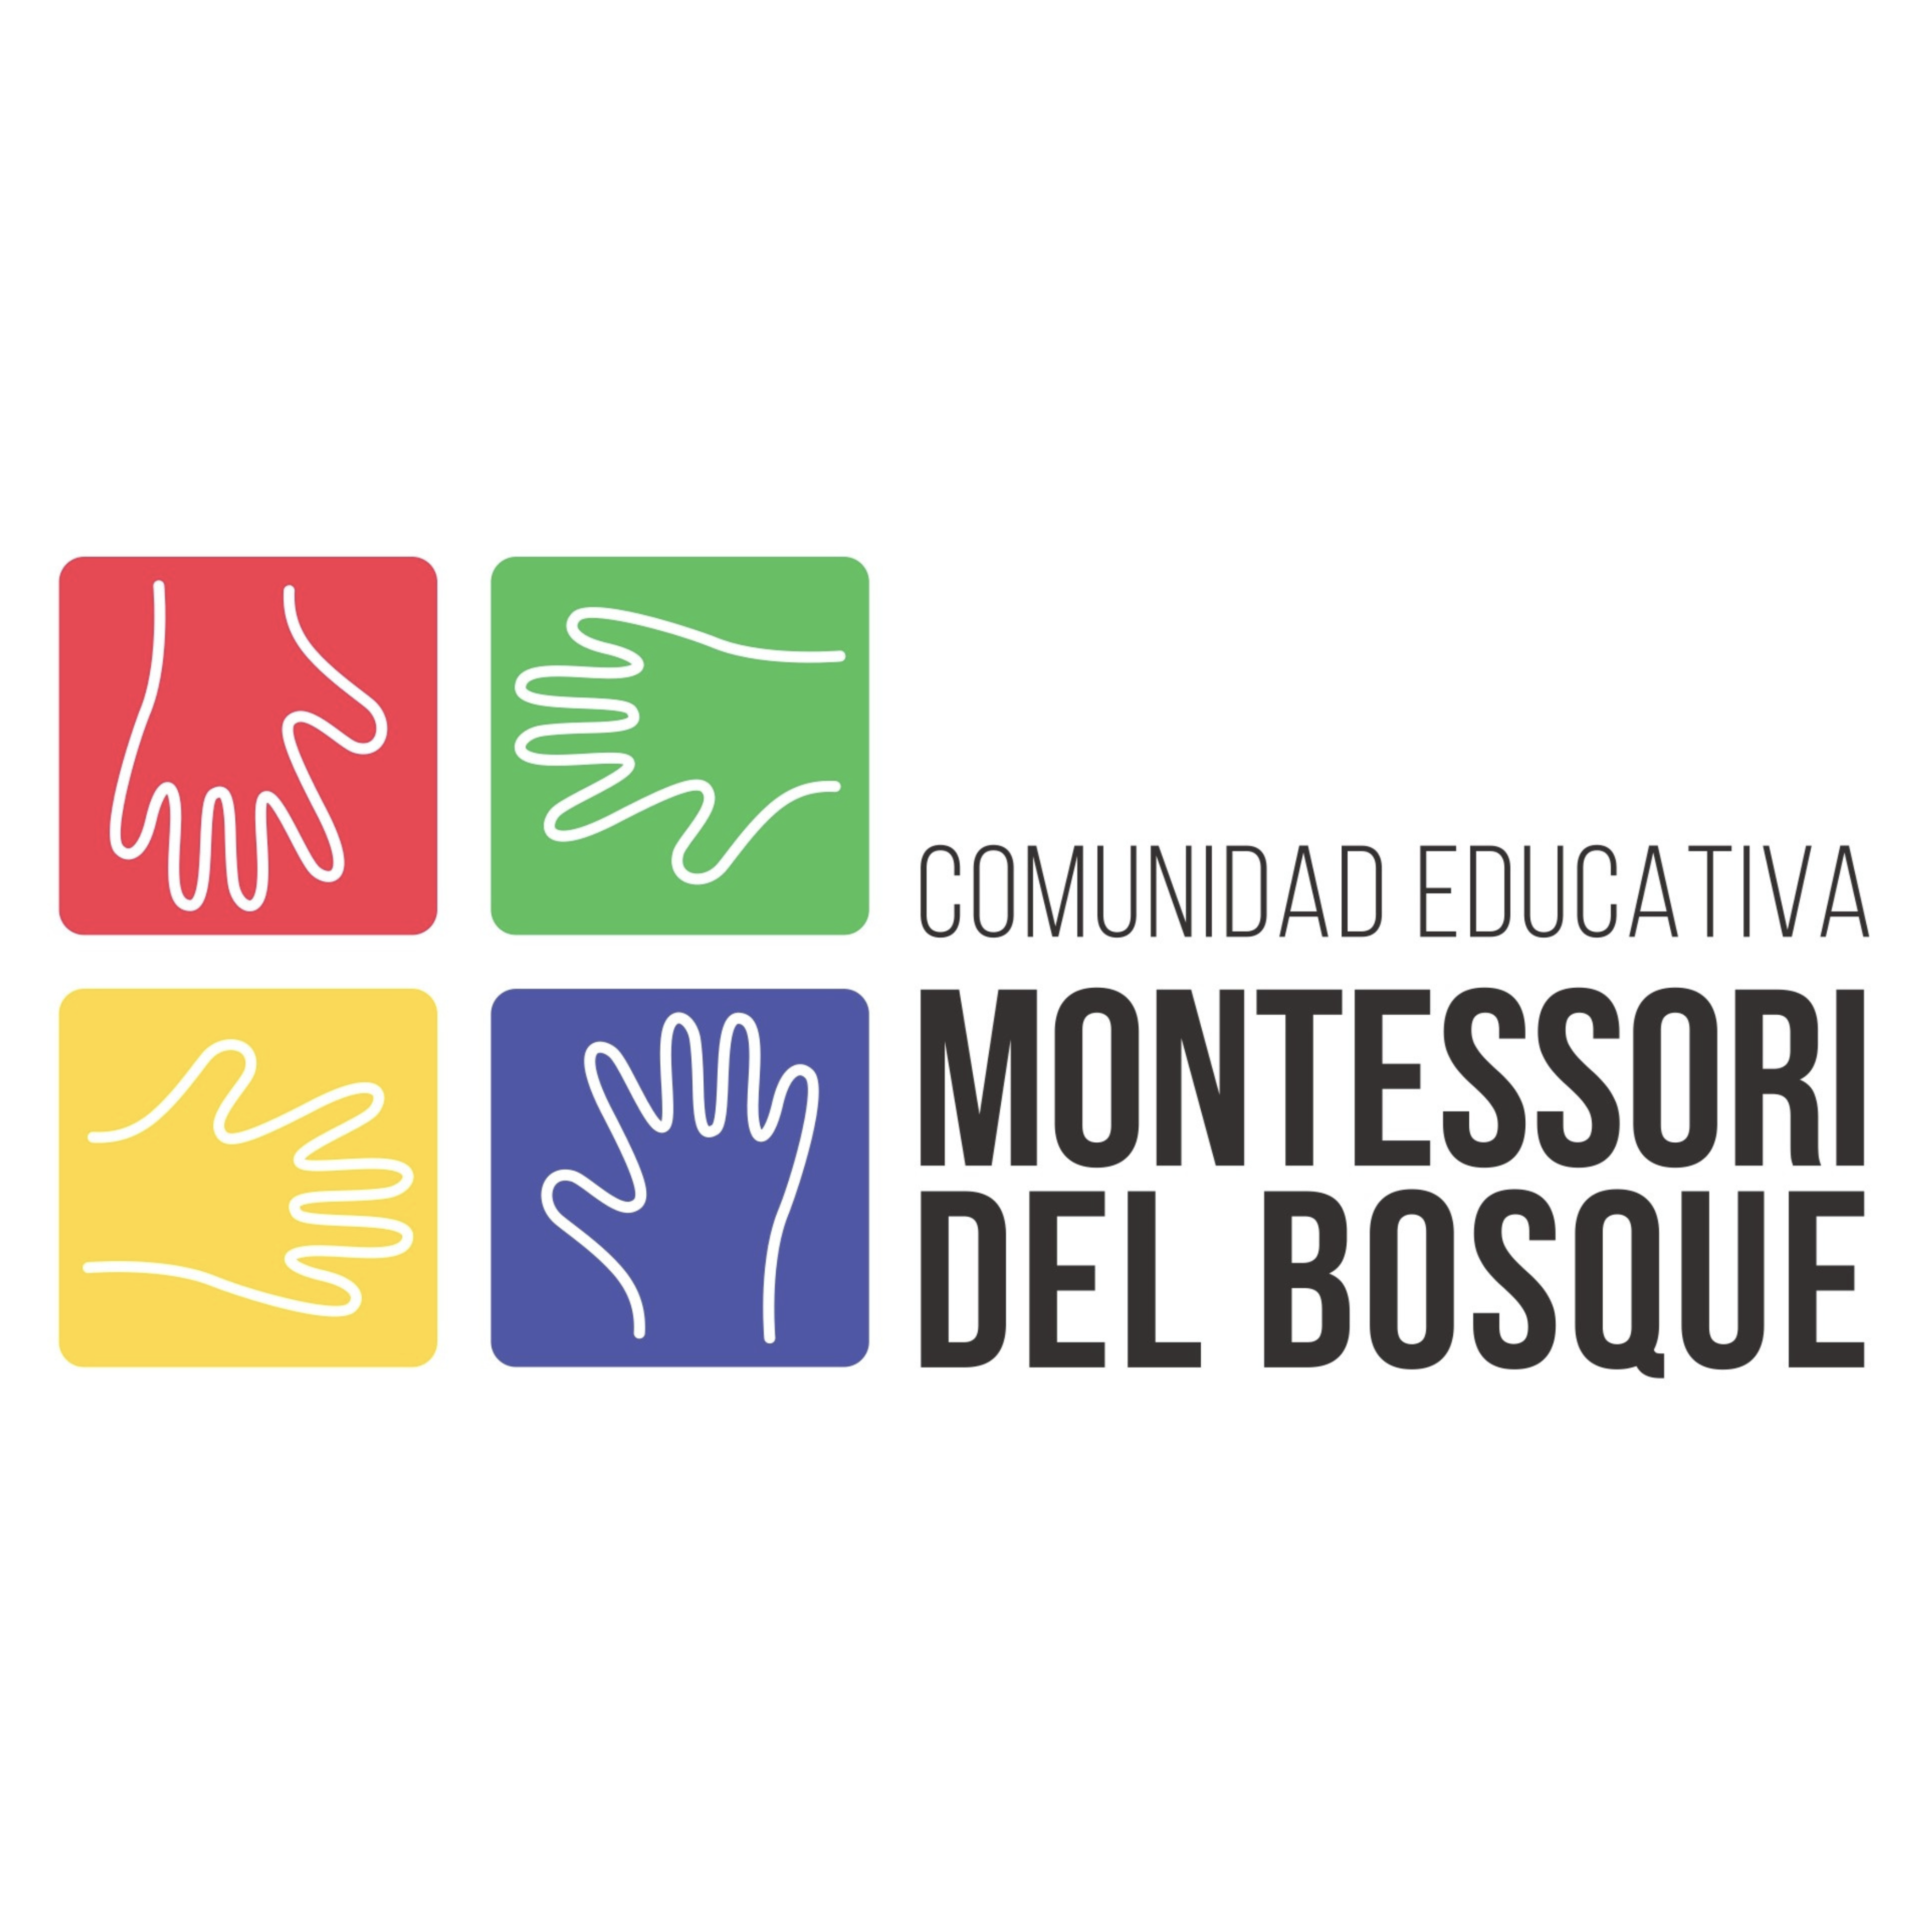 Comunidad Educativa Montesssori del Bosque con Campus Móvil